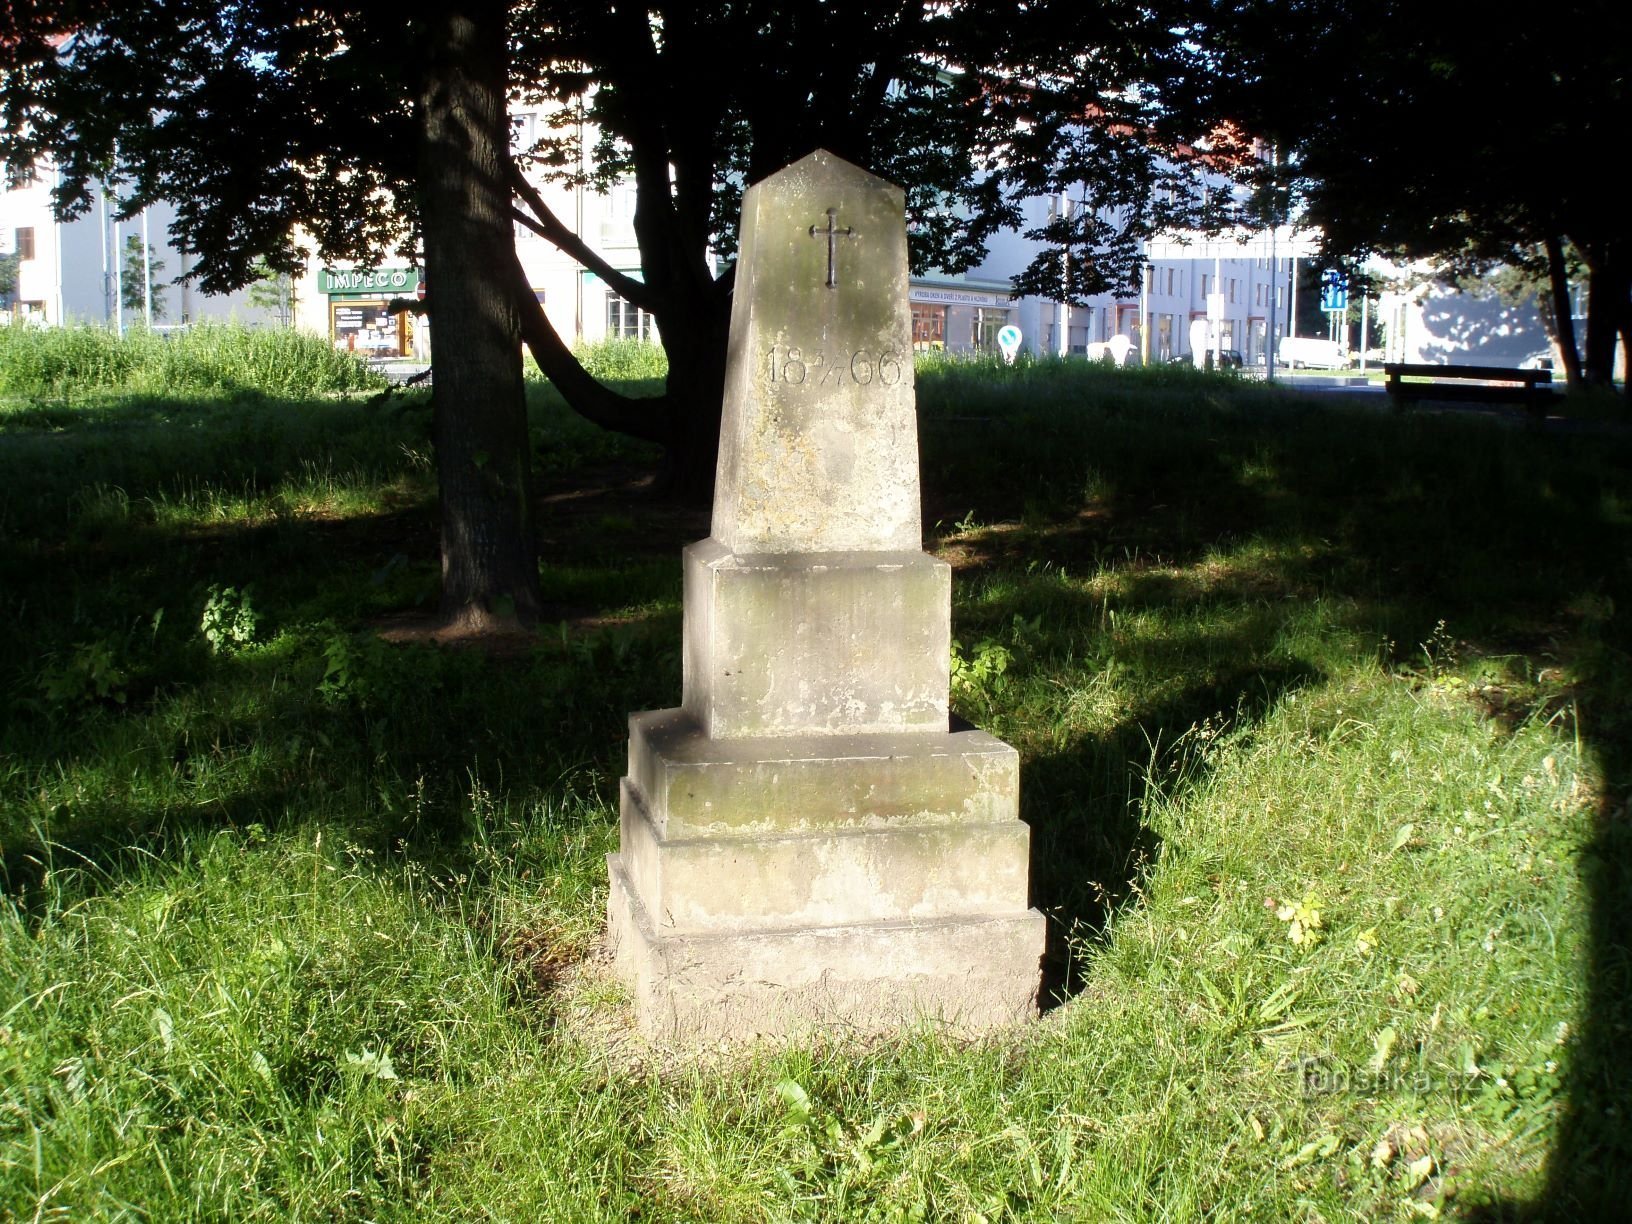 Monument til den preussisk-østrigske krig i 1866 på Blažíčk-pladsen (Hradec Králové, 24.6.2012/XNUMX/XNUMX)